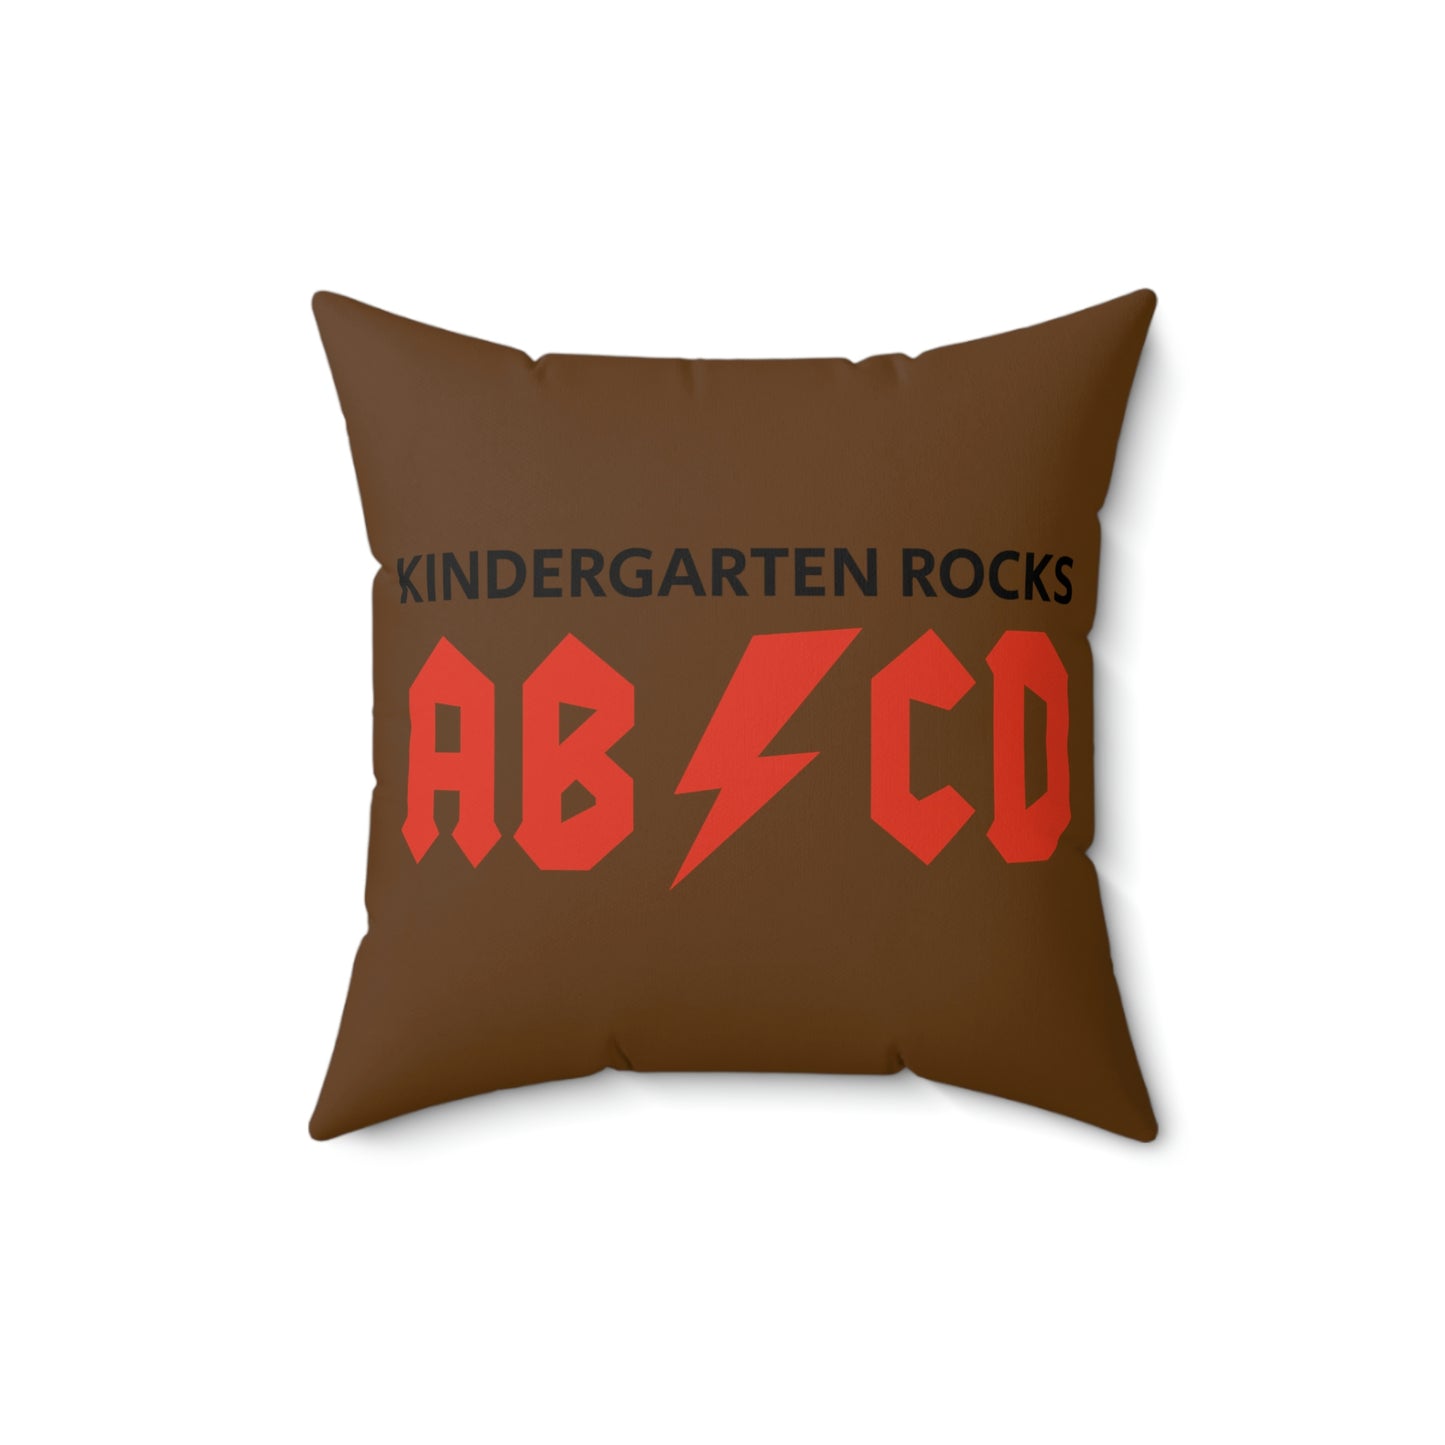 Spun Polyester Square Pillow Case “Kindergarten Rocks on Brown”